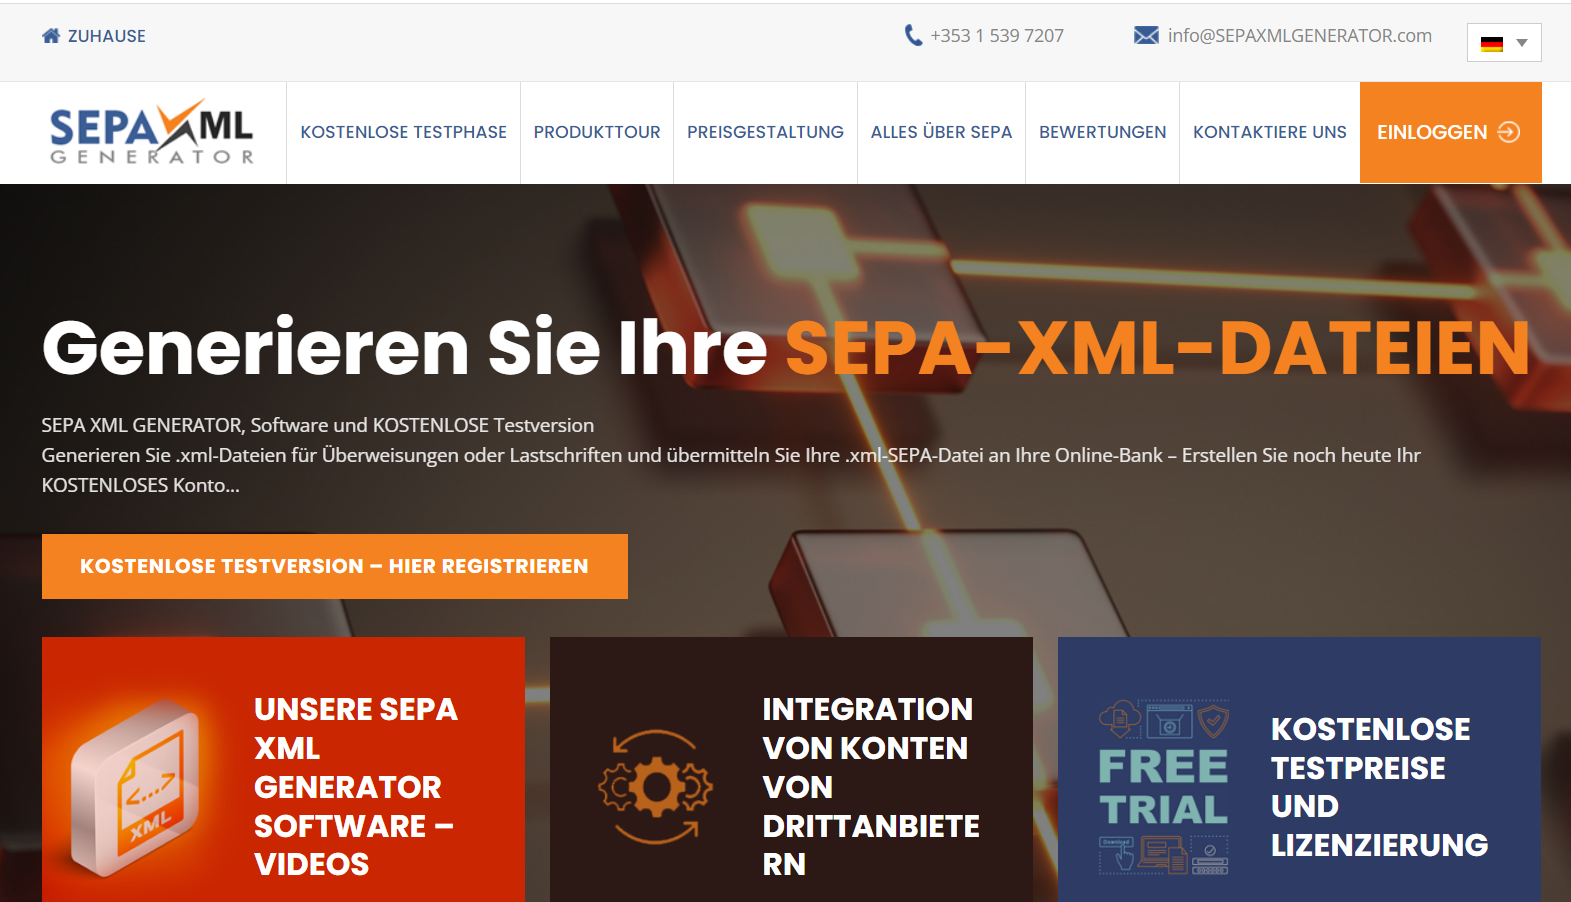 SEPA XML GENERATOR τώρα στα γερμανικά